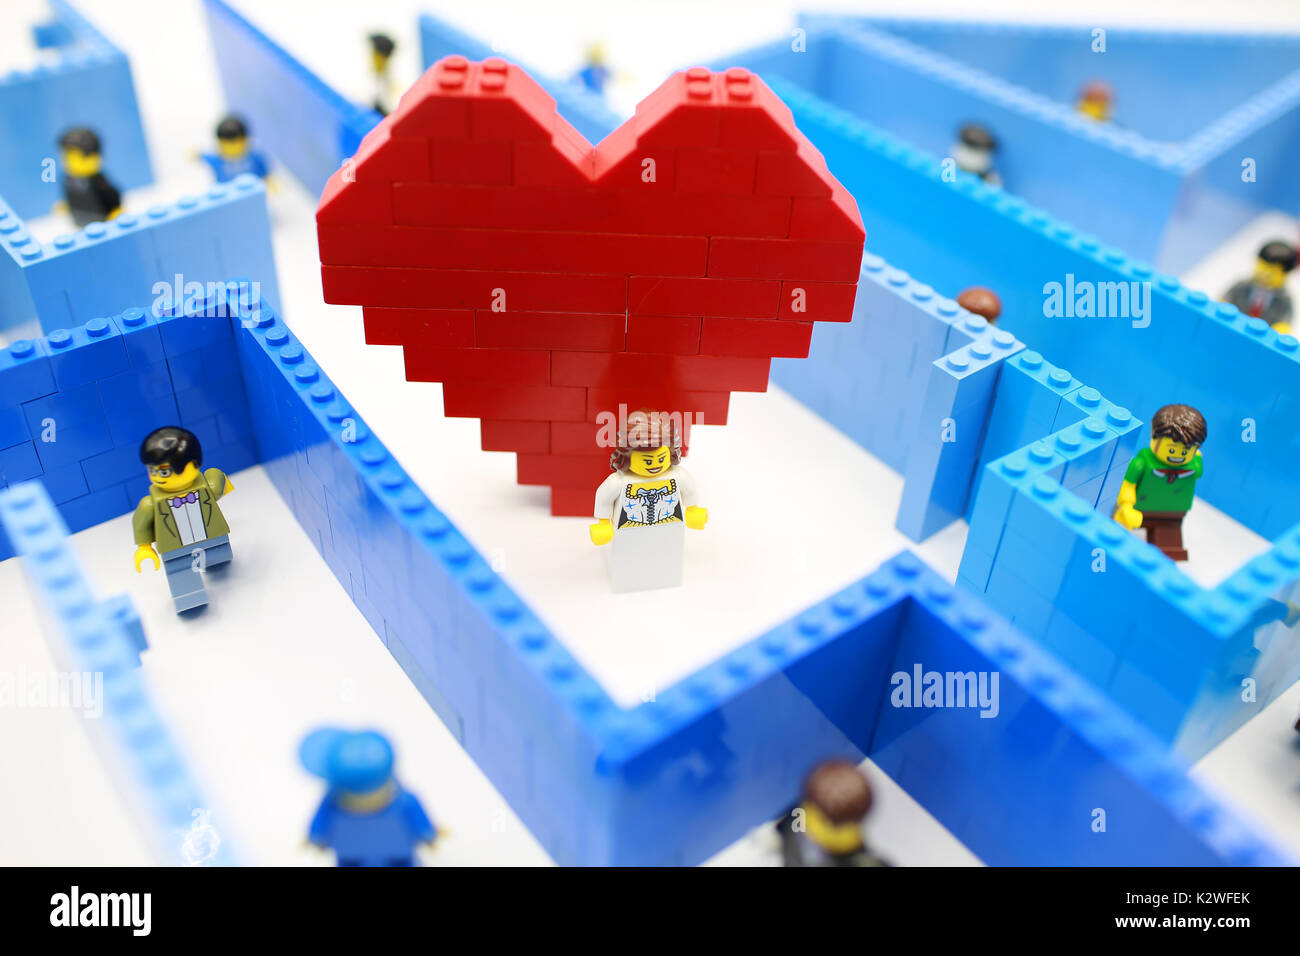 lego love hide and seek Stock Photo - Alamy